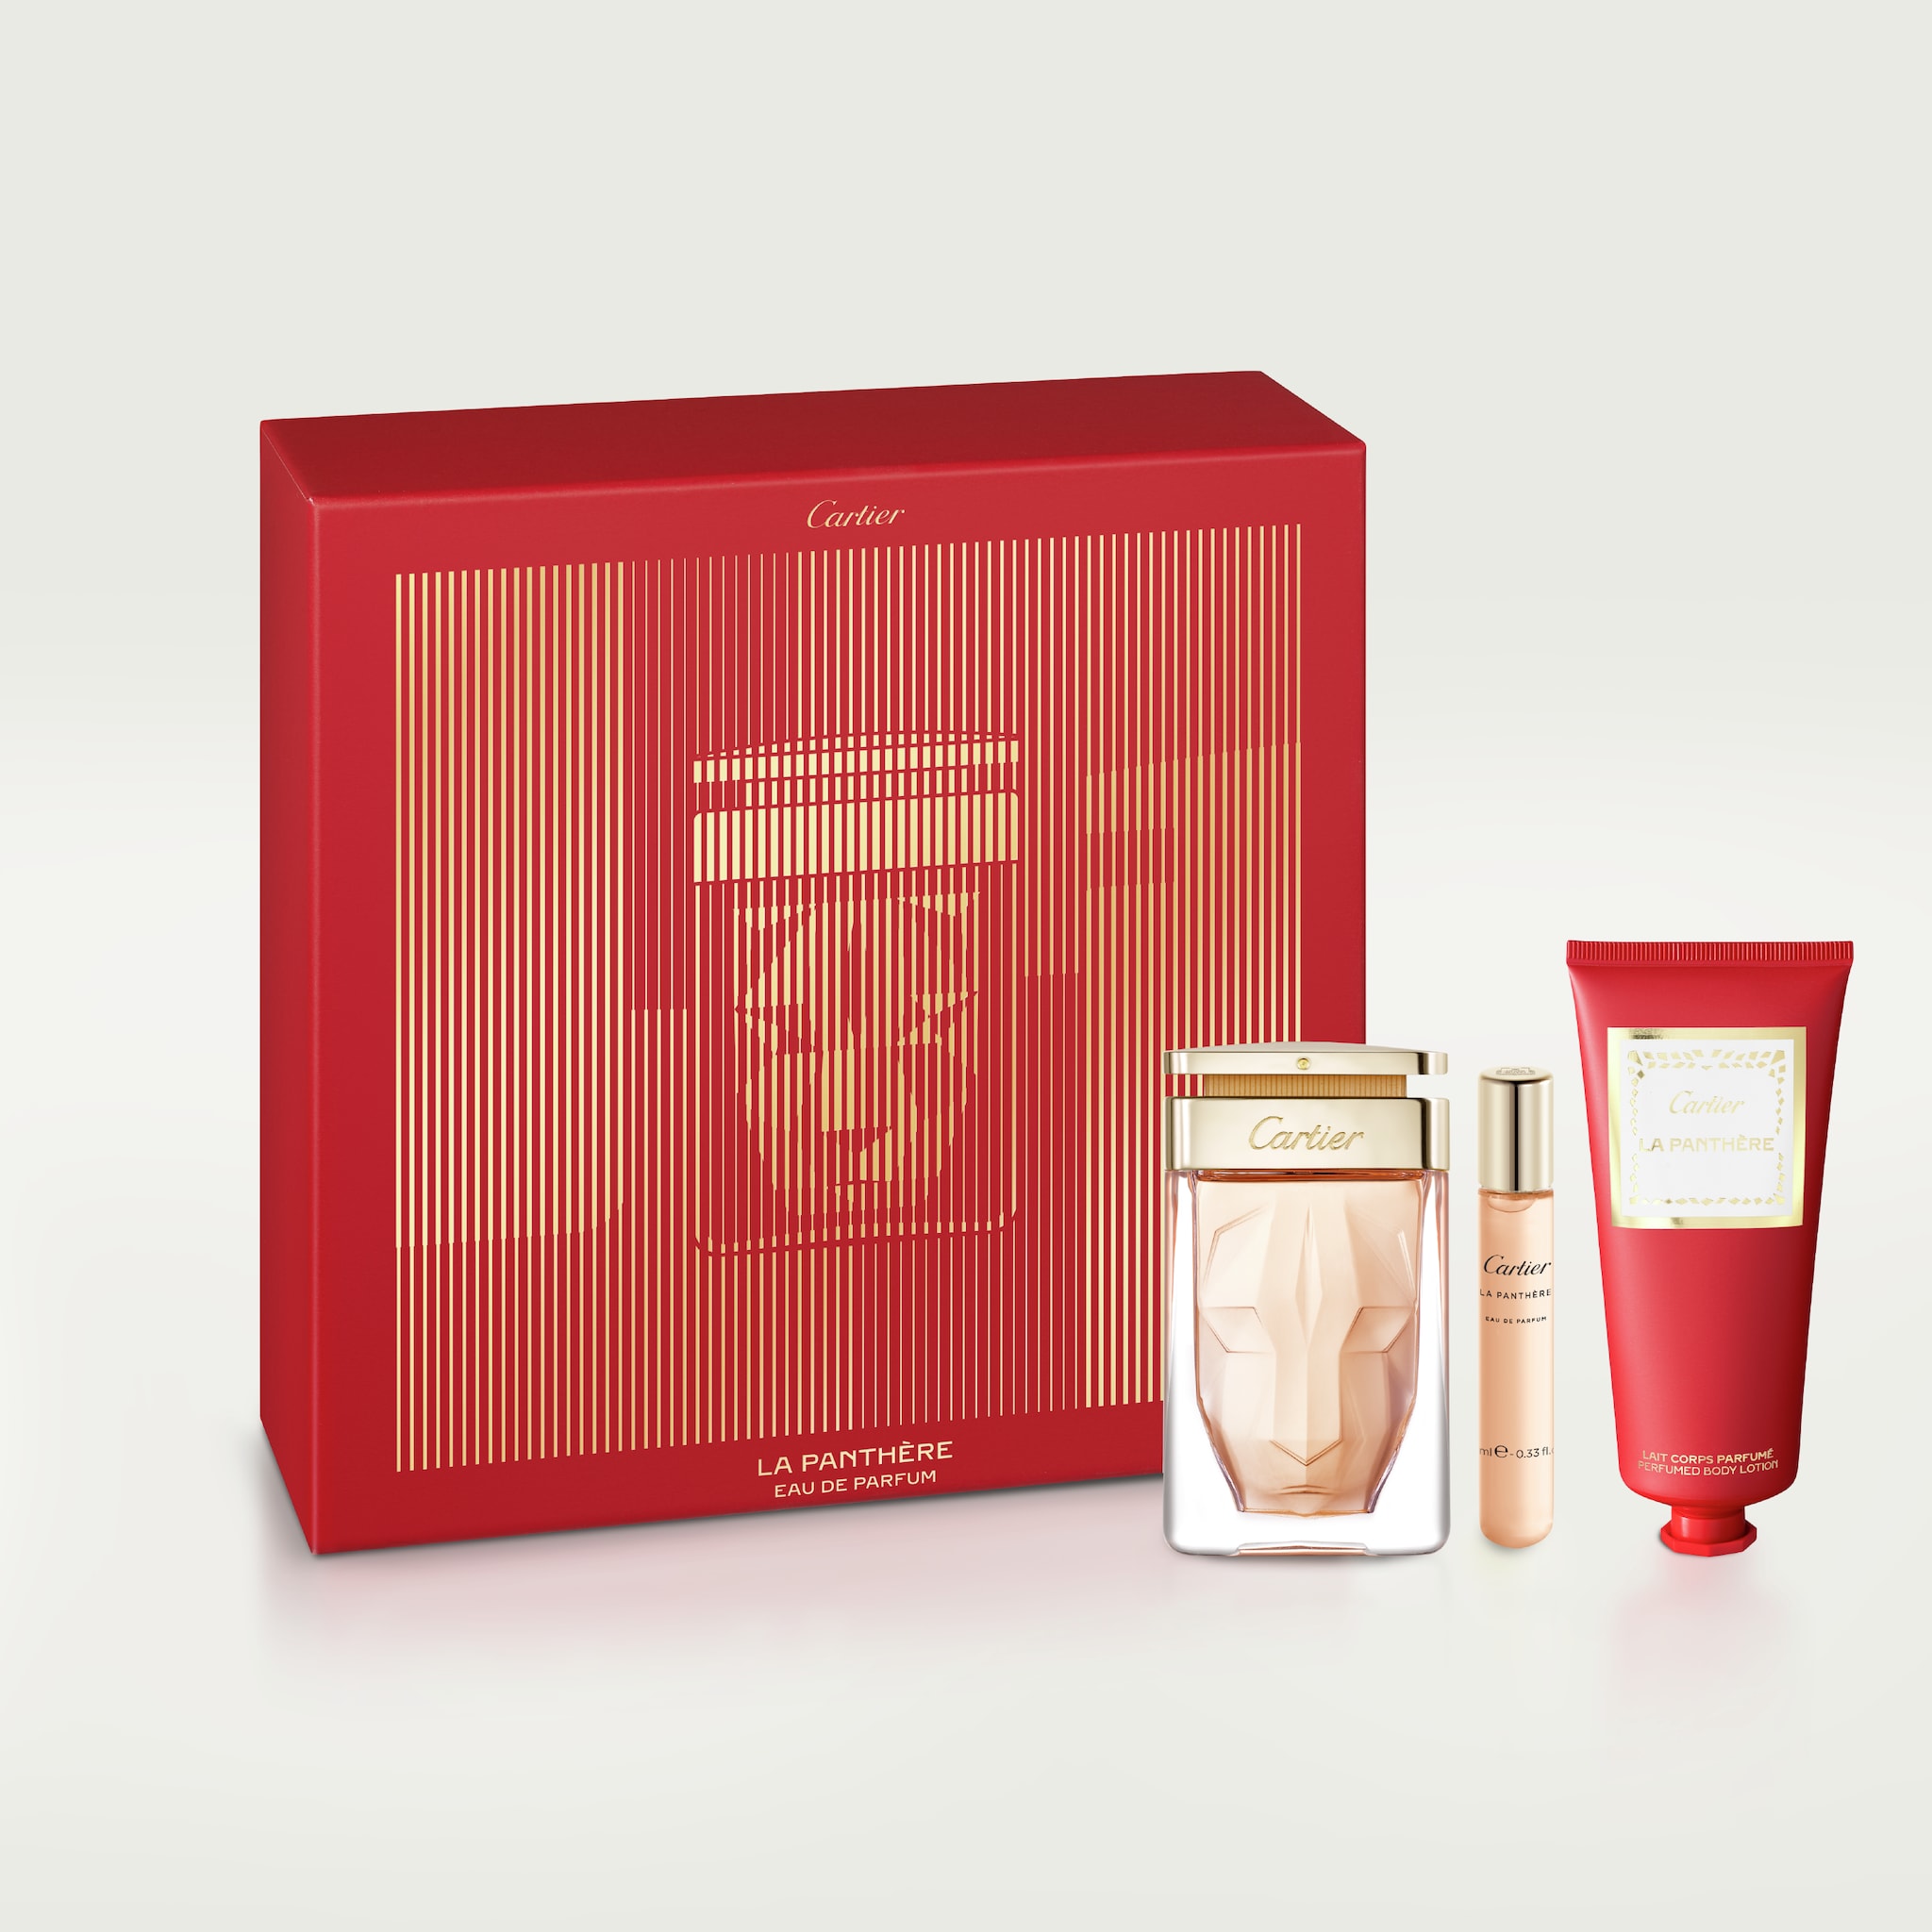 La Panthère Gift Set with 75 ml Eau de Parfum, 10 ml Purse Spray and 100 ml Perfumed Body Lotion.Gift set